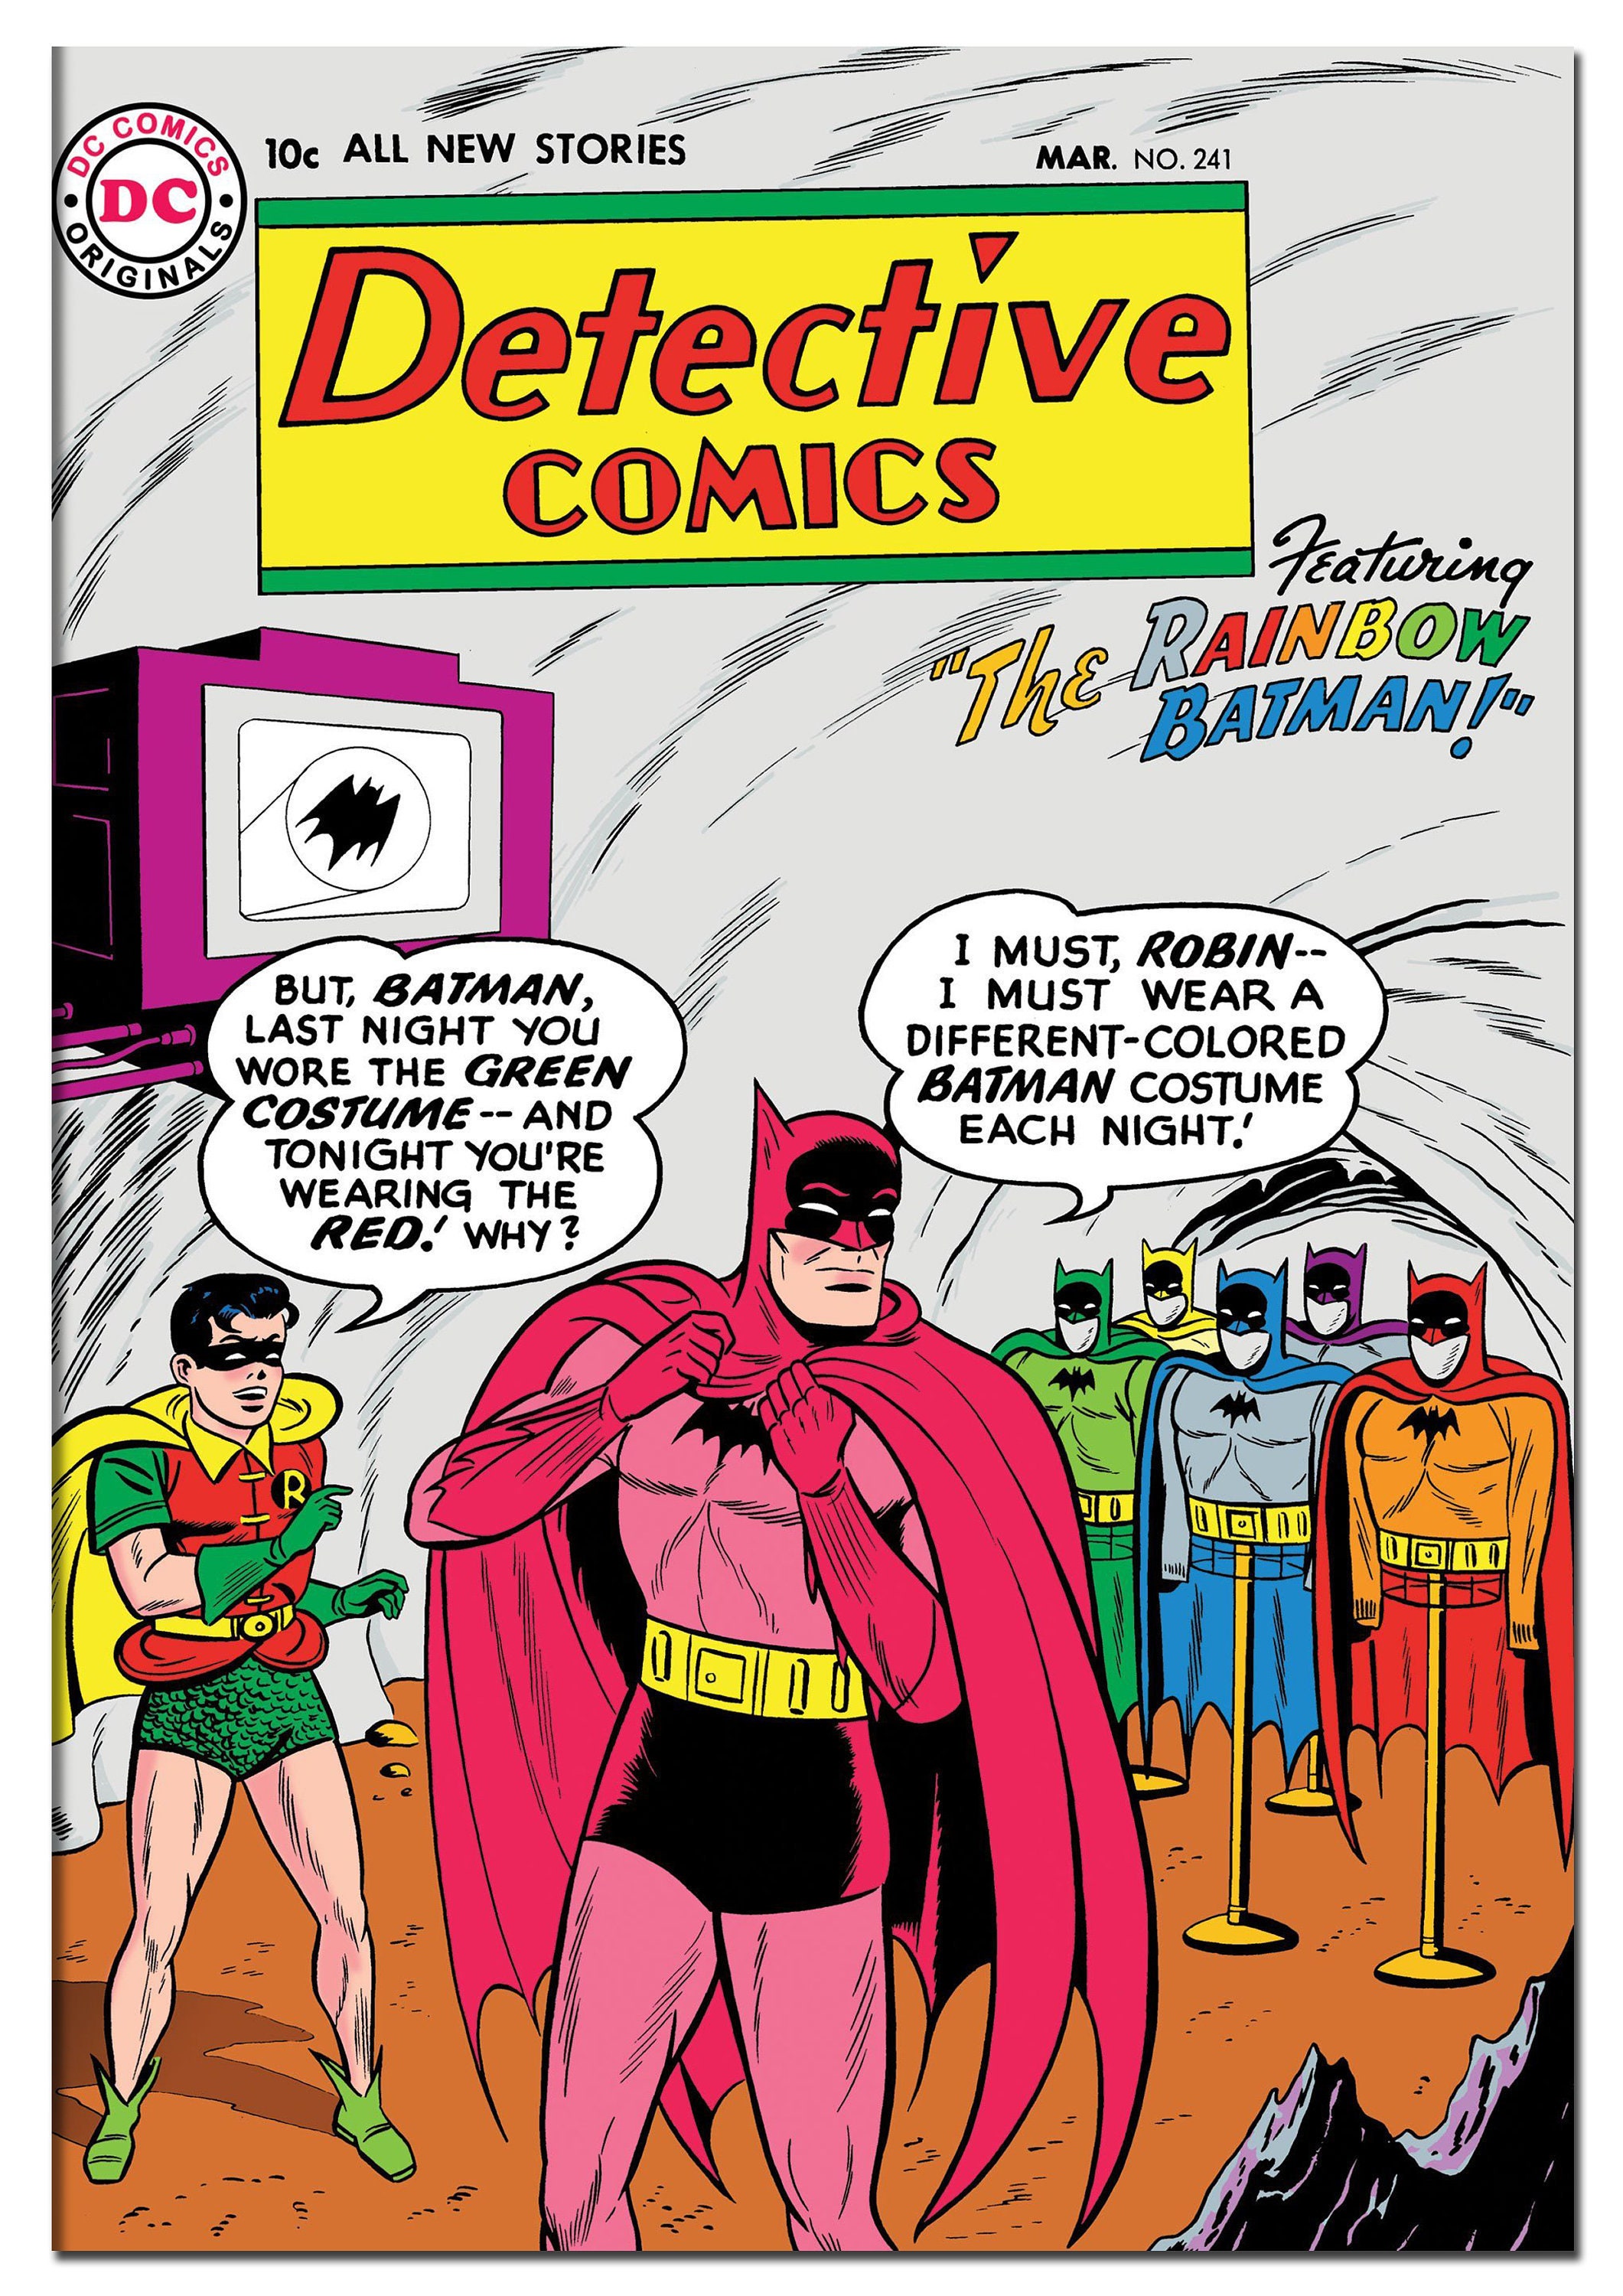 Detective Comics Issue 241 March 1957 the Rainbow Batman - Etsy Israel